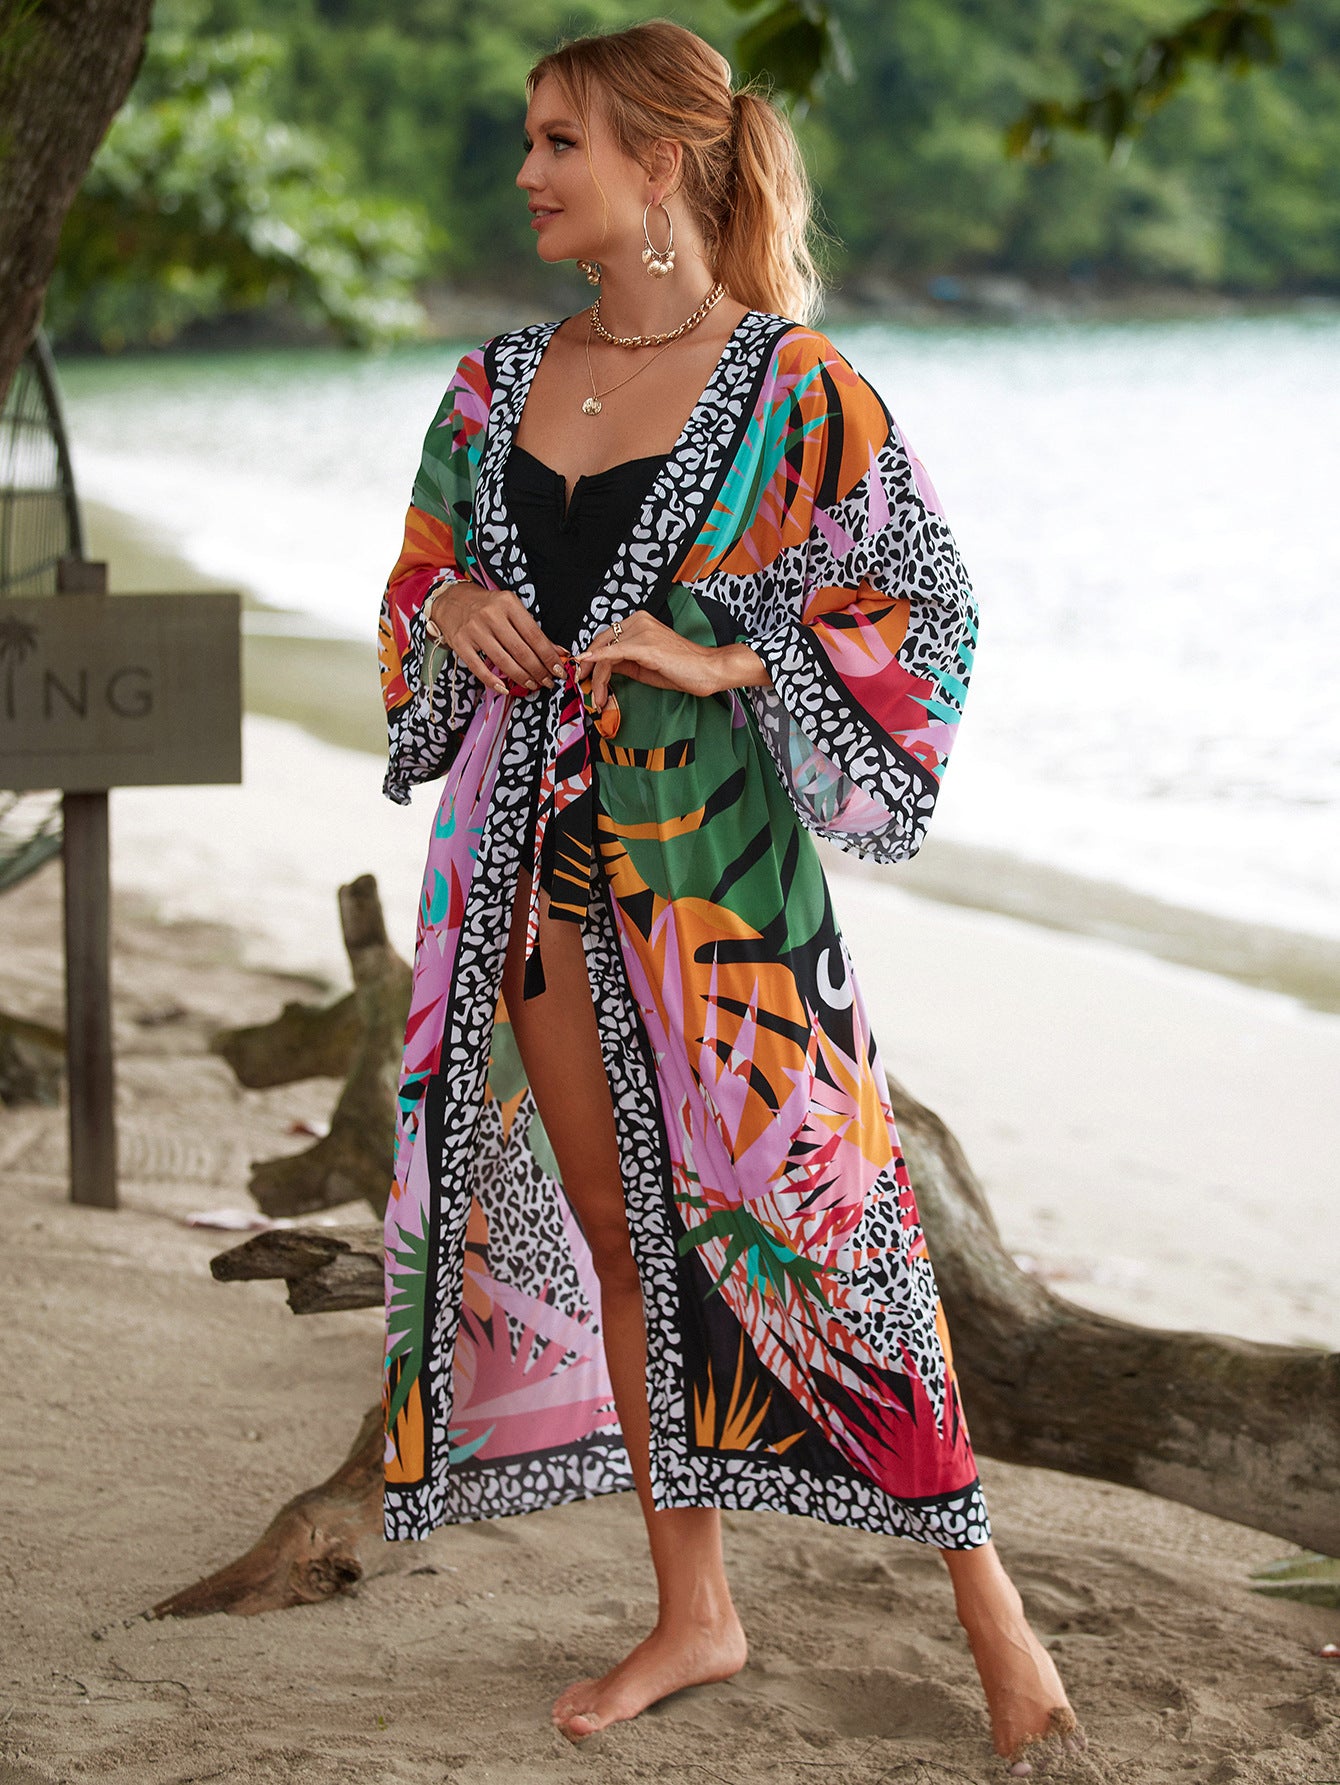 Boho Printed Long Kimono Dress Bathing Suit Cover-ups Summer Clothing Tunic Women Beach Wear Swim Suit Cover Up Q1512-1120-7